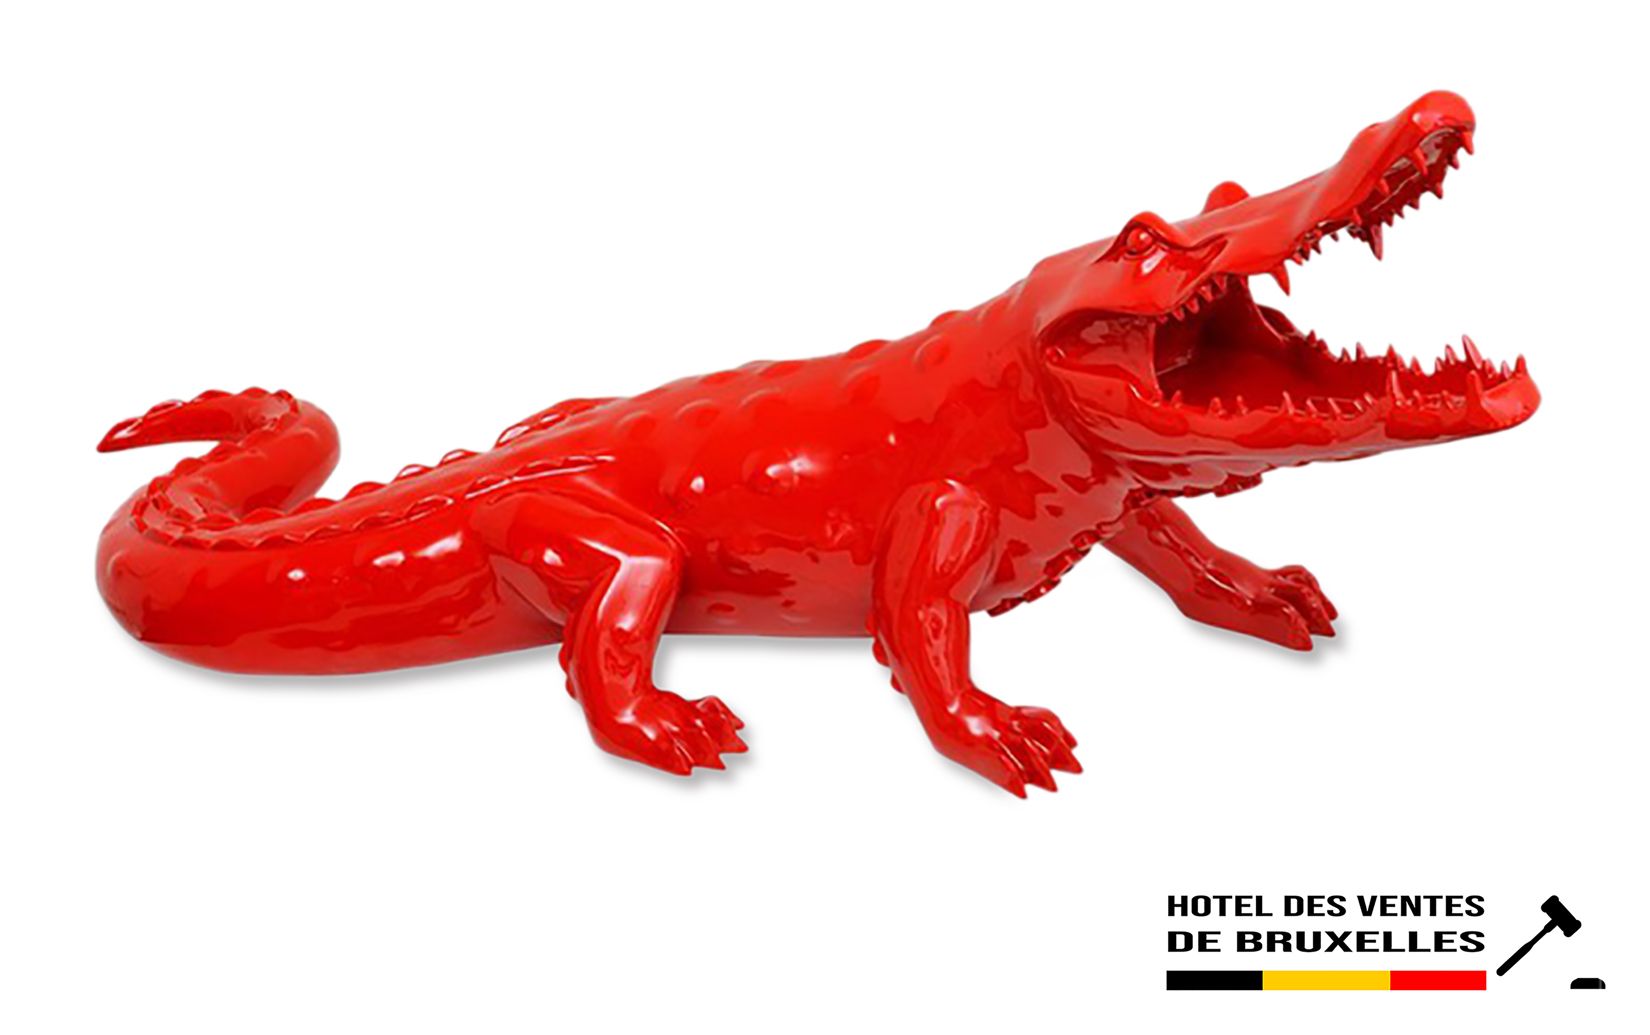 ORLINSKI 艺术家Richard ORLINSKI的雕塑作品
来自他著名的《生而狂野》系列
尺寸：110厘米
材质：树脂 标题：鳄鱼生而狂野的红色
作品签&hellip;